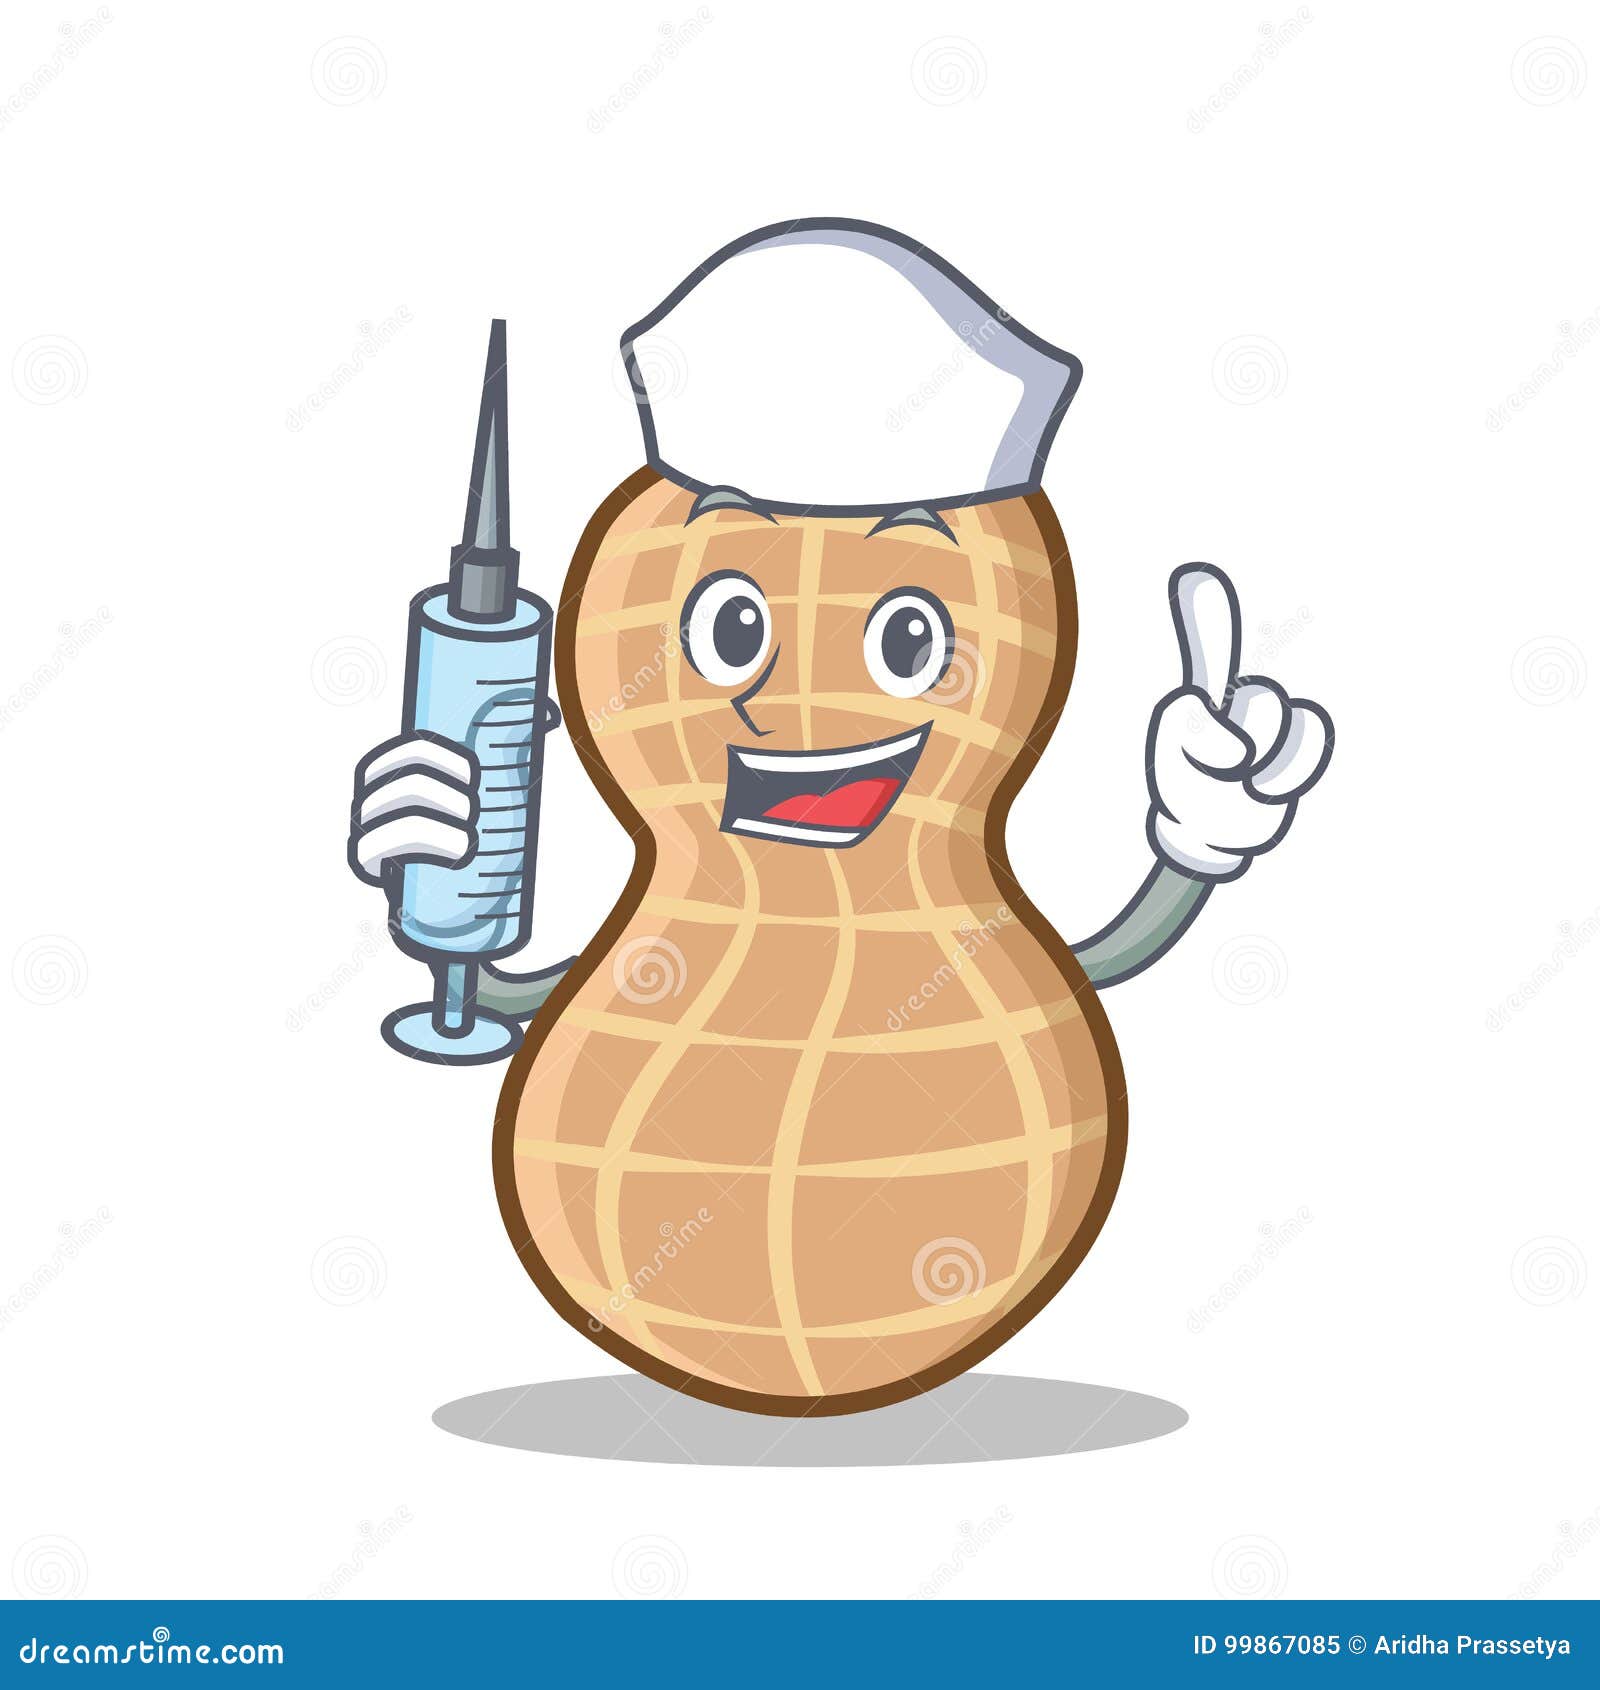 https://thumbs.dreamstime.com/z/nurse-peanut-character-cartoon-style-vector-illustration-nurse-peanut-character-cartoon-style-99867085.jpg